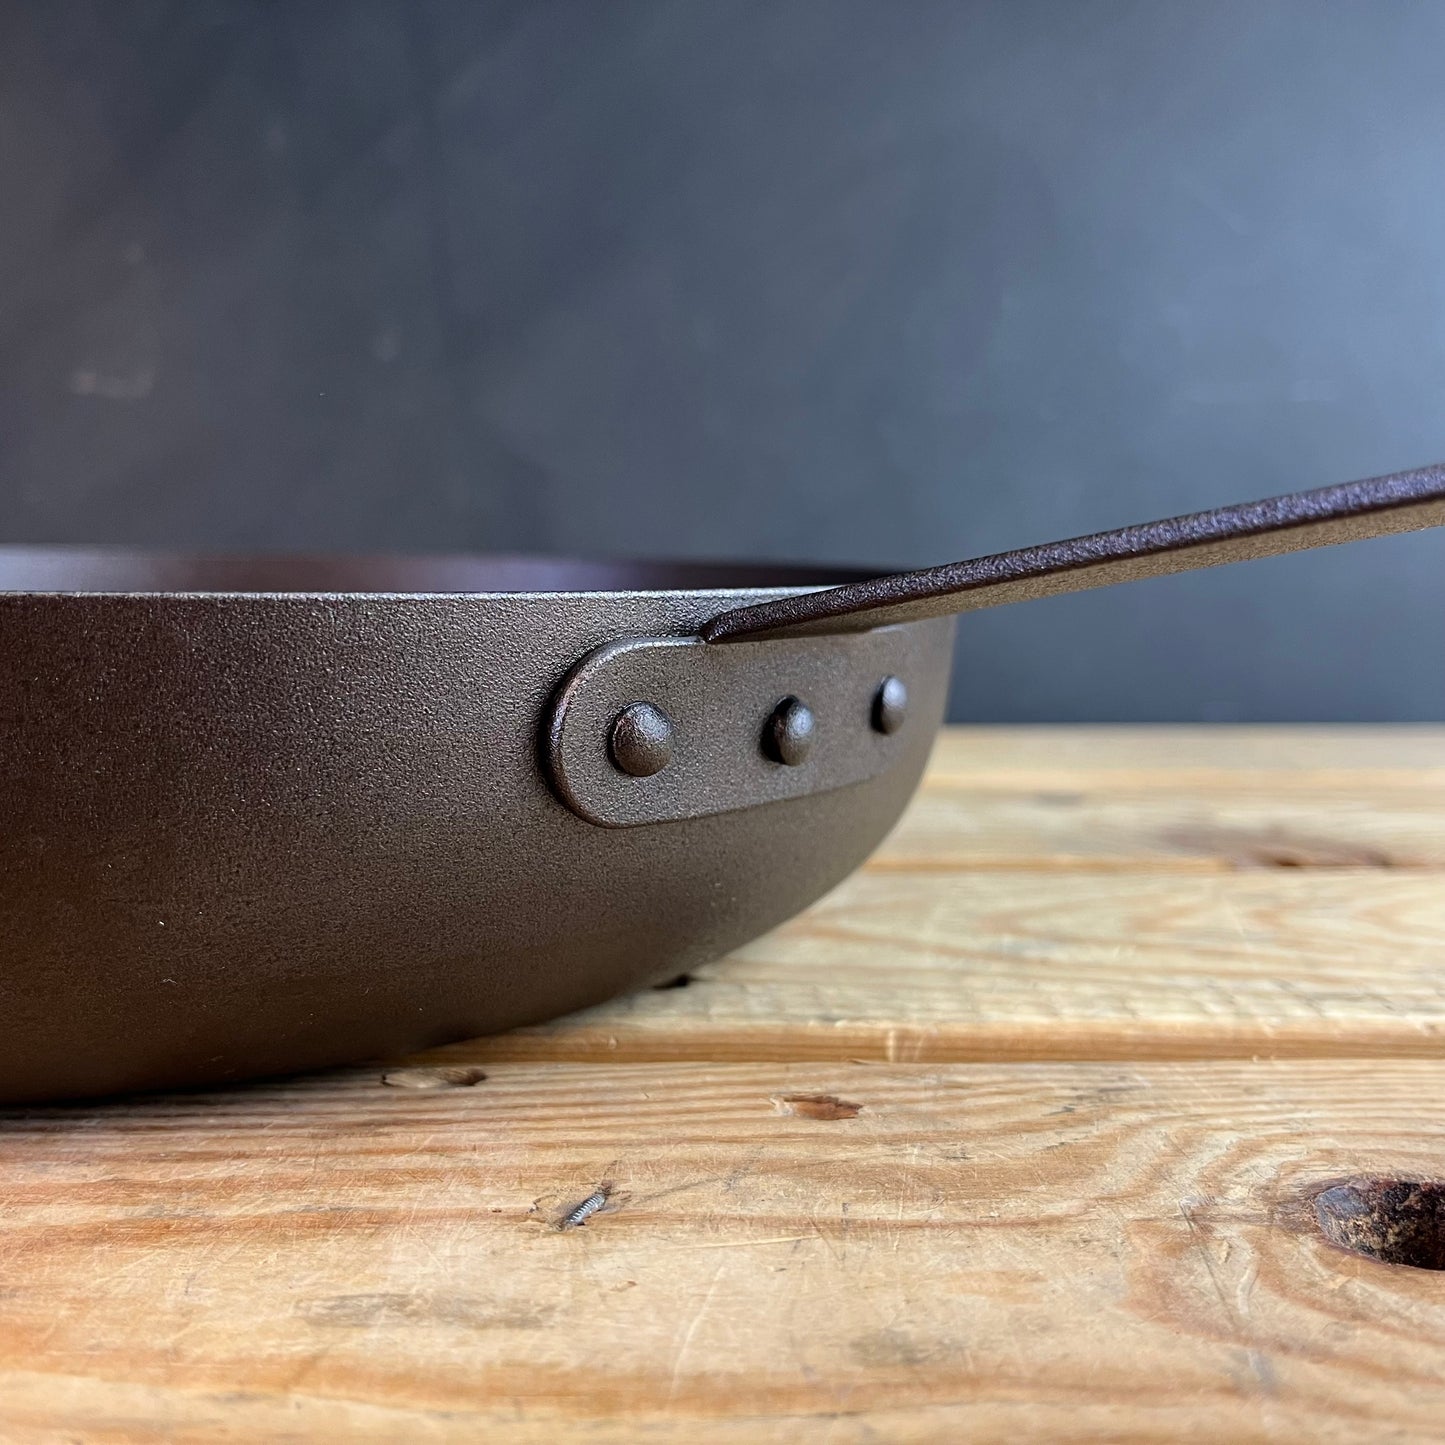 Netherton Foundry 11" (28cm) Spun Iron Chef's pan